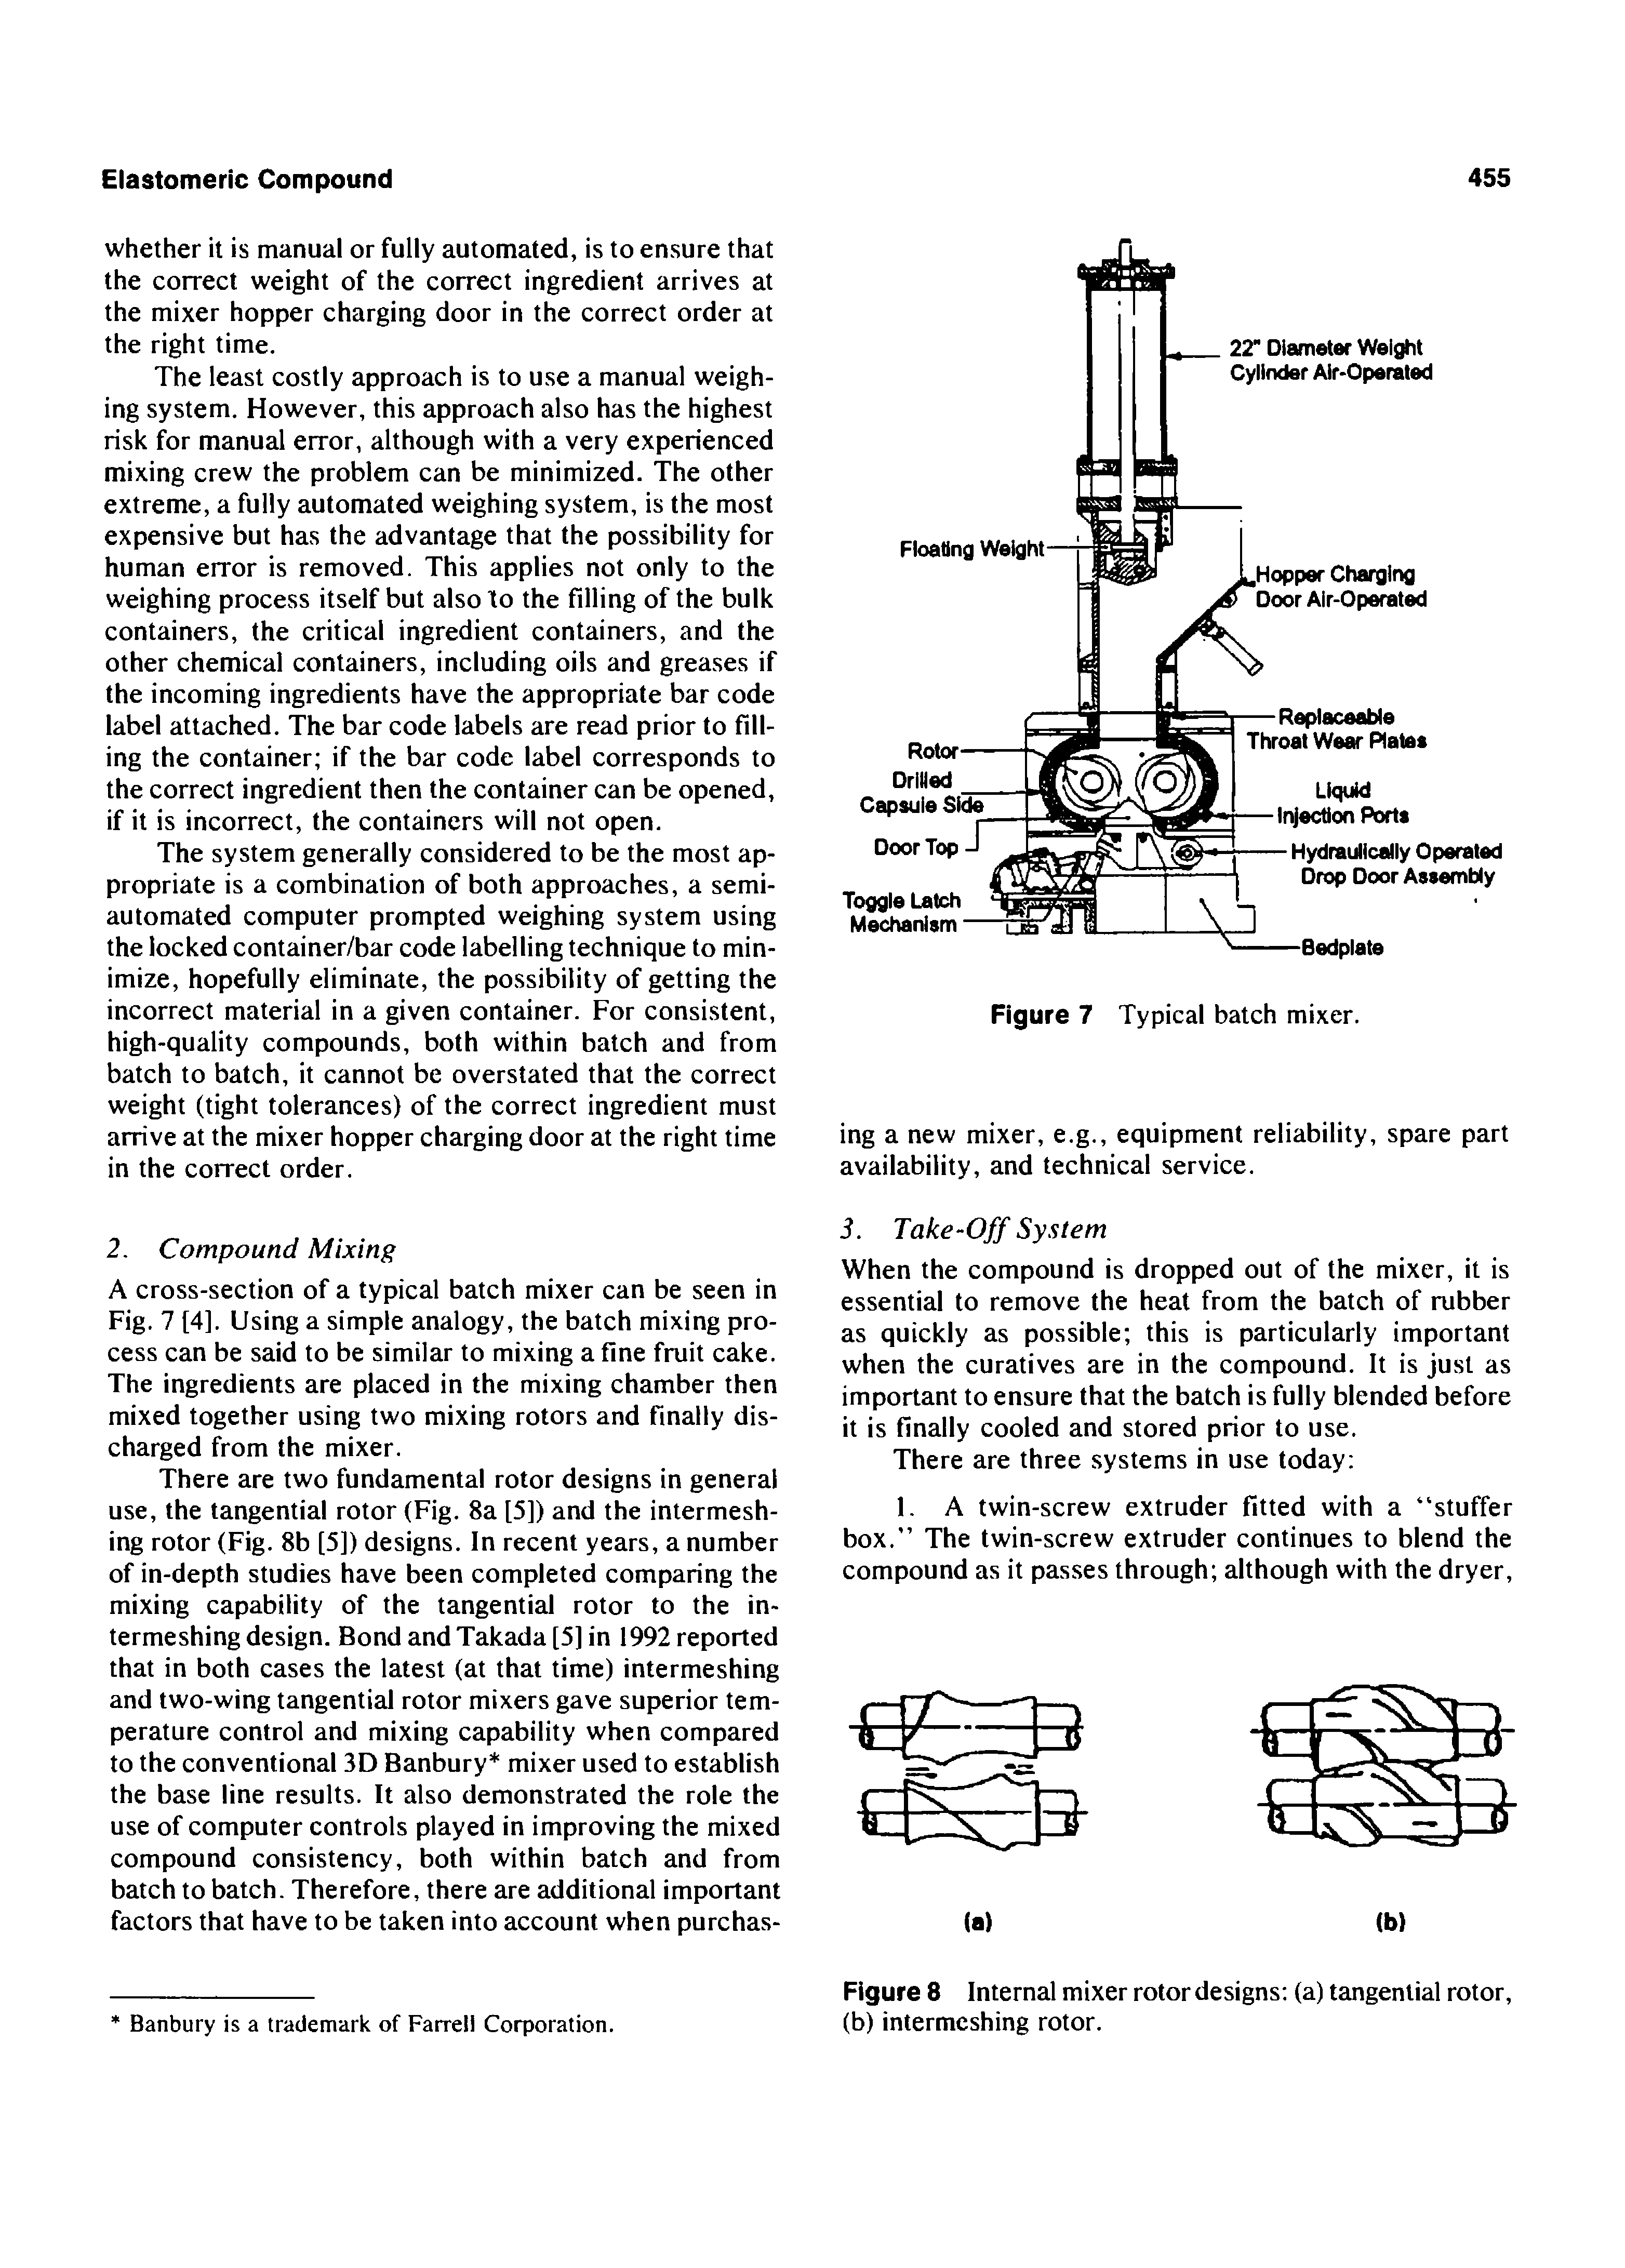 Figure 8 Internal mixer rotor designs (a) tangential rotor, (b) intermeshing rotor.